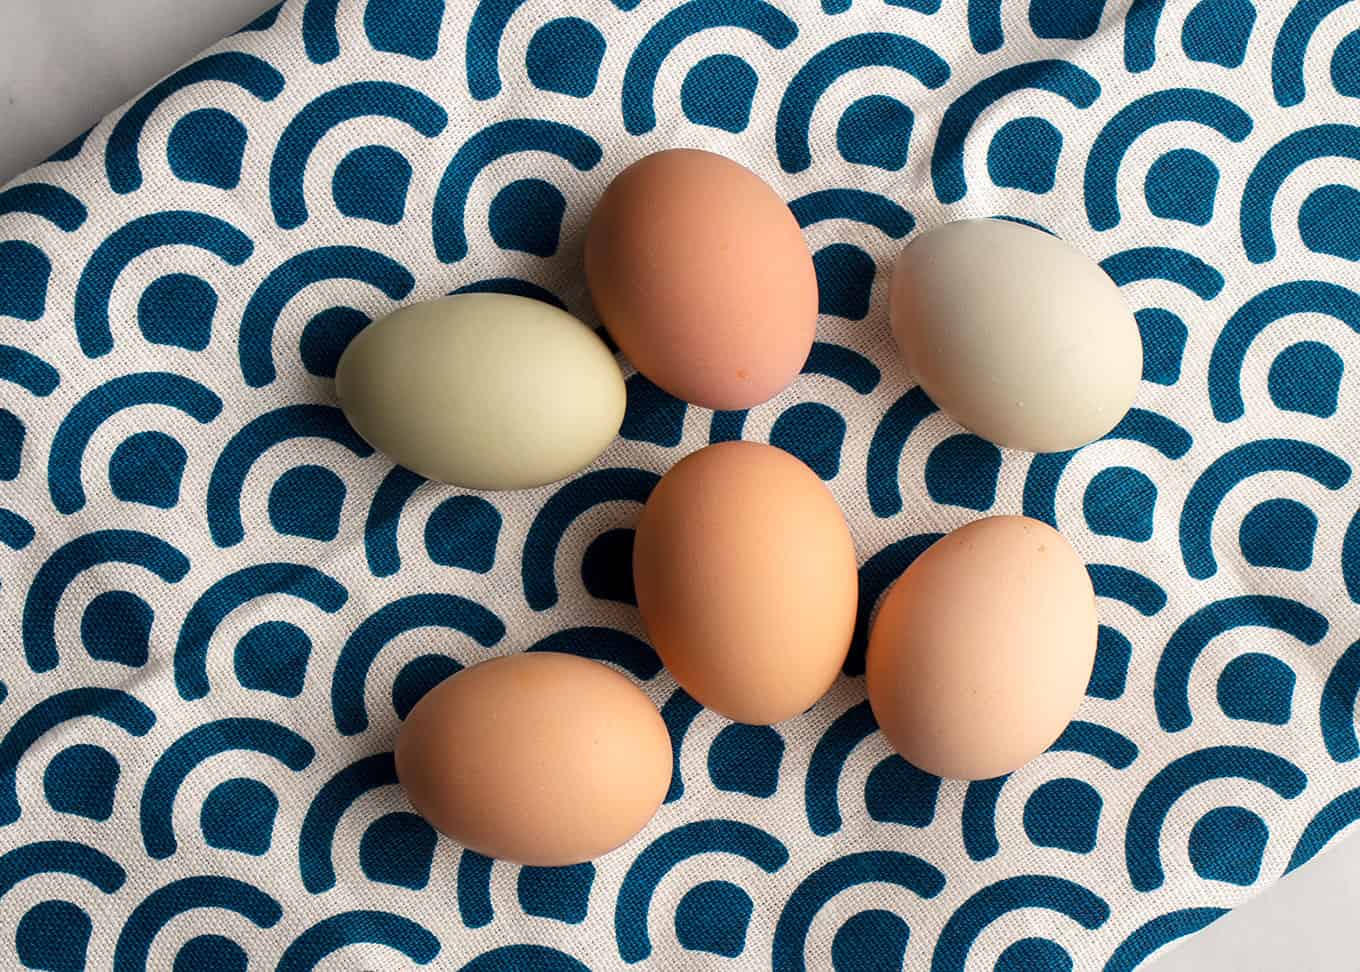 Farm fresh eggs laying on a blue patterned tea towel